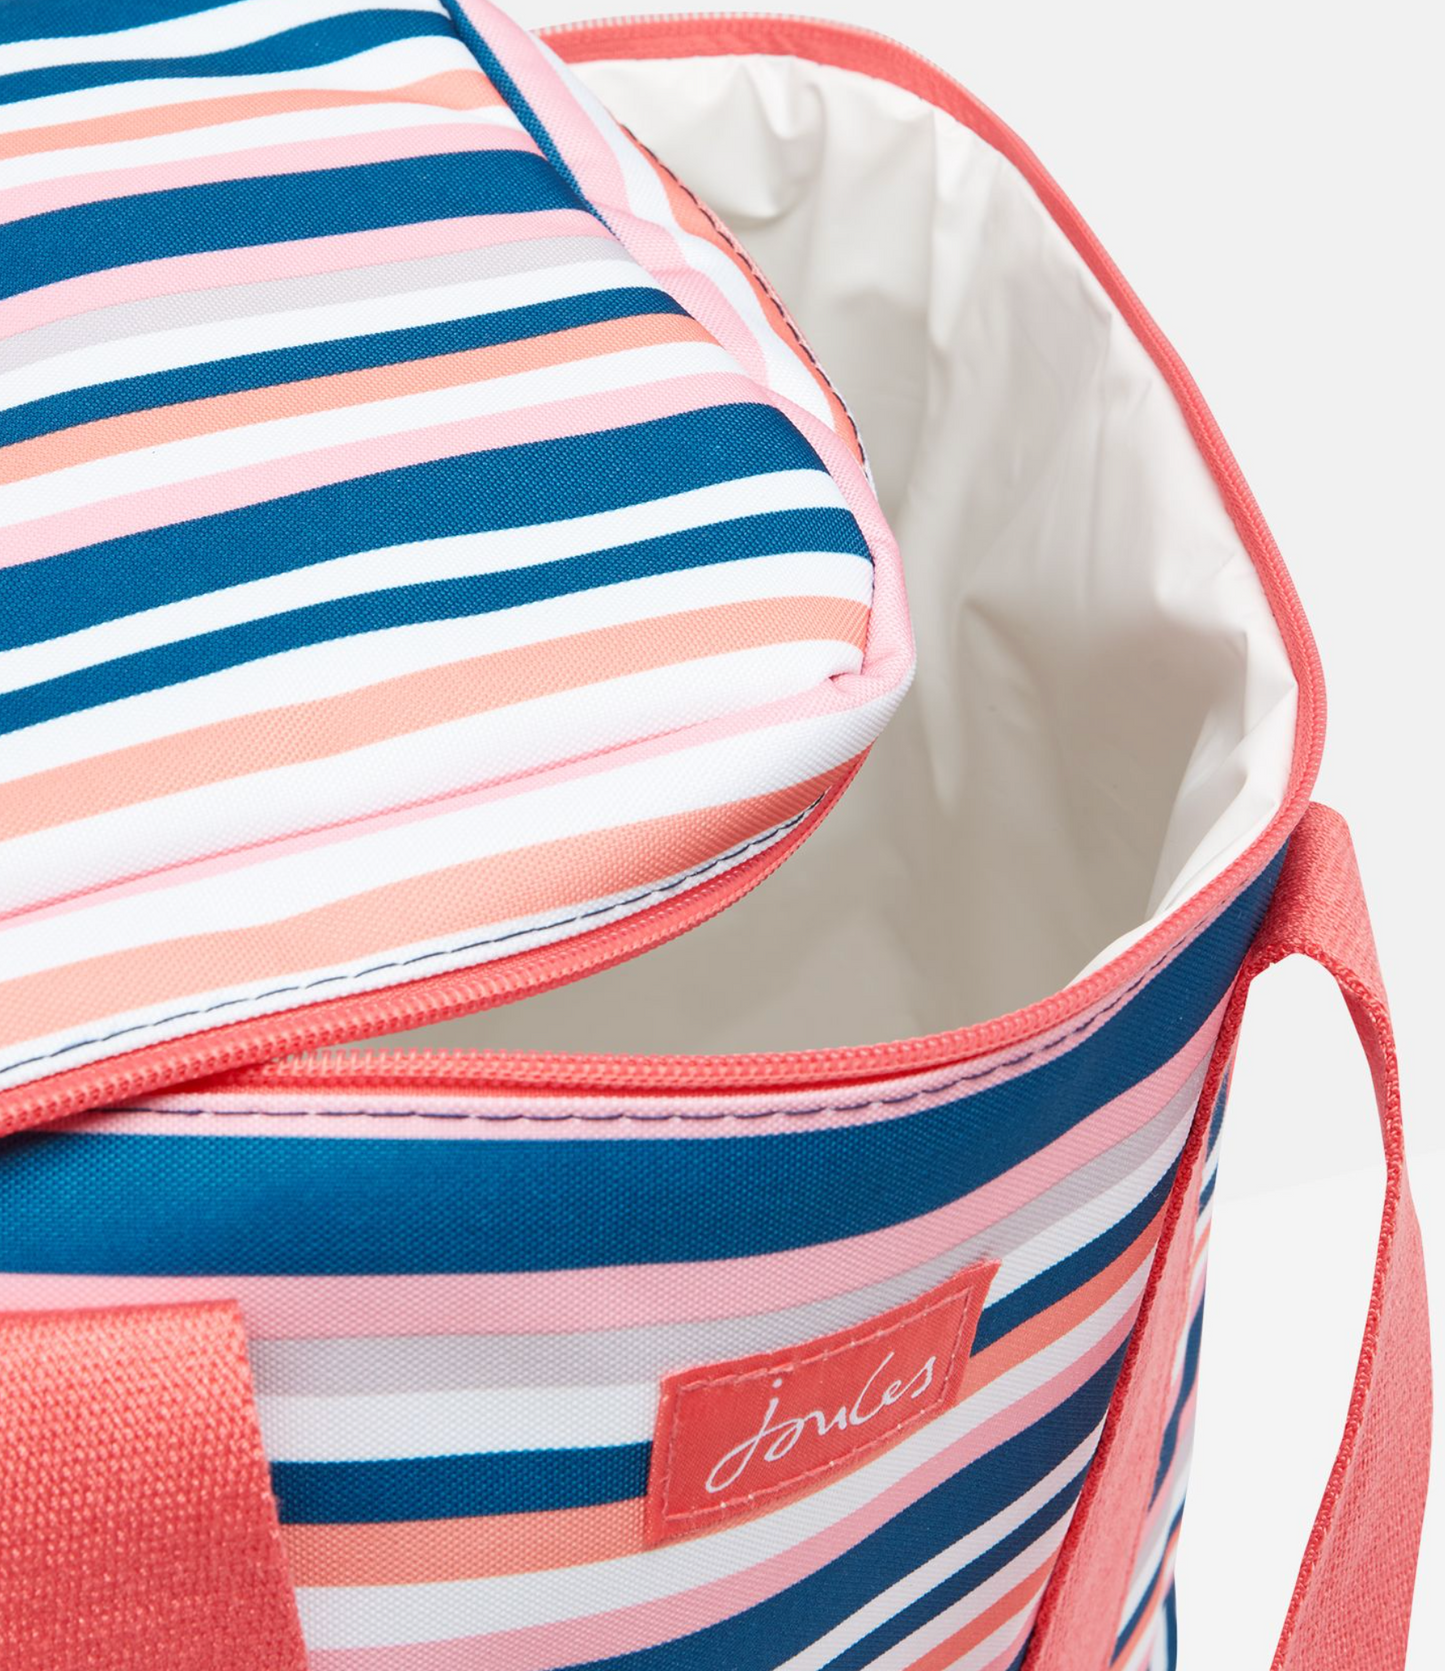 Joules Large Picnic Cooler Bag, Stripes